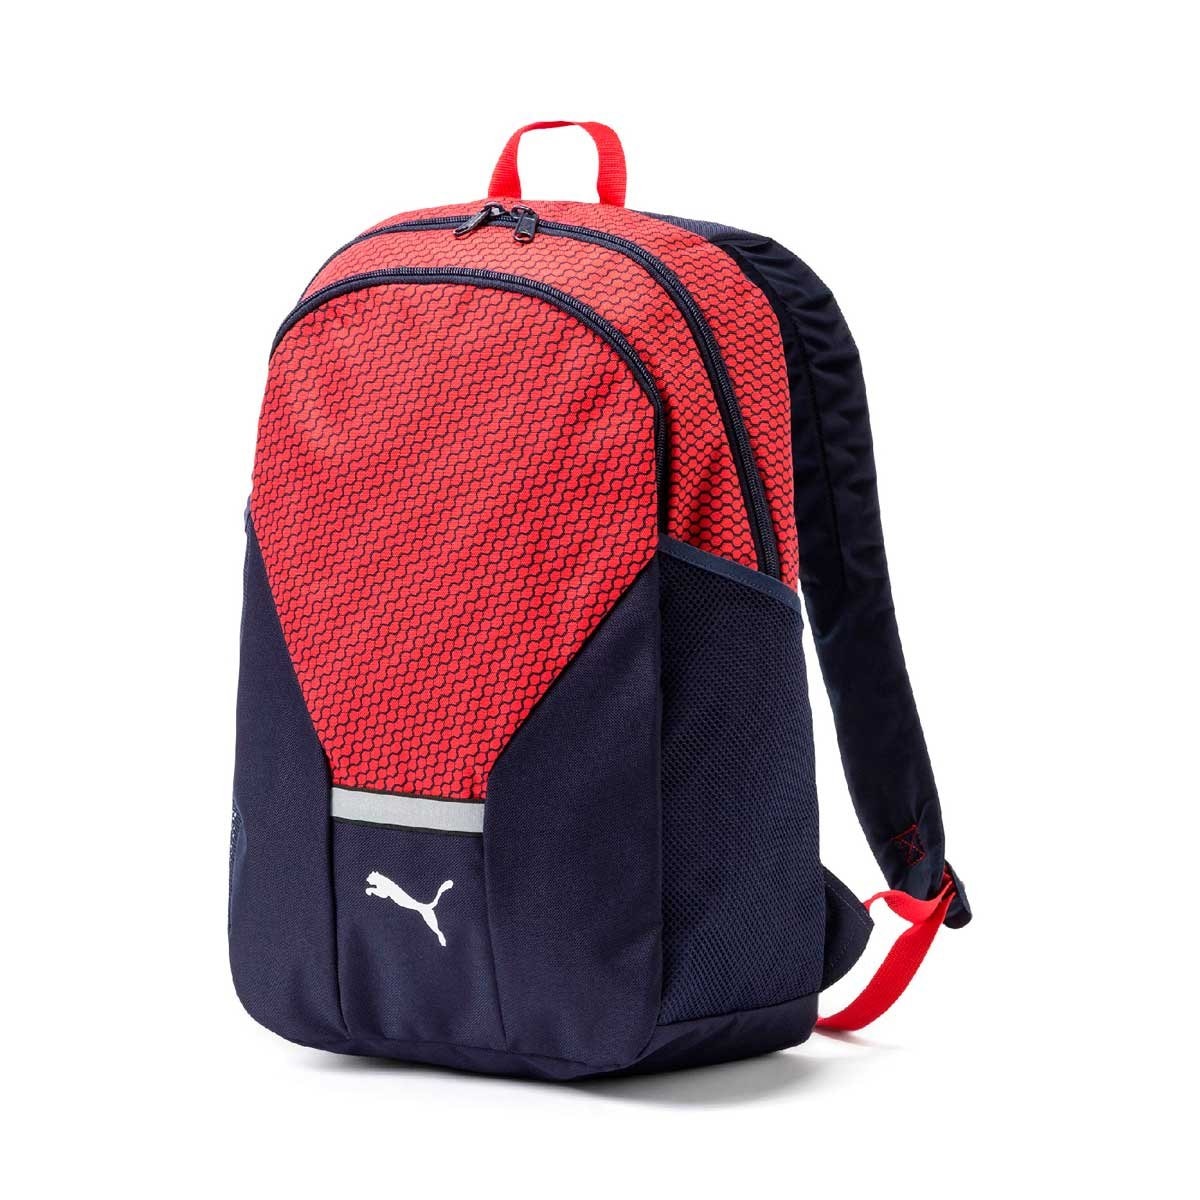 Mochila roja beta backpack puma - Sears